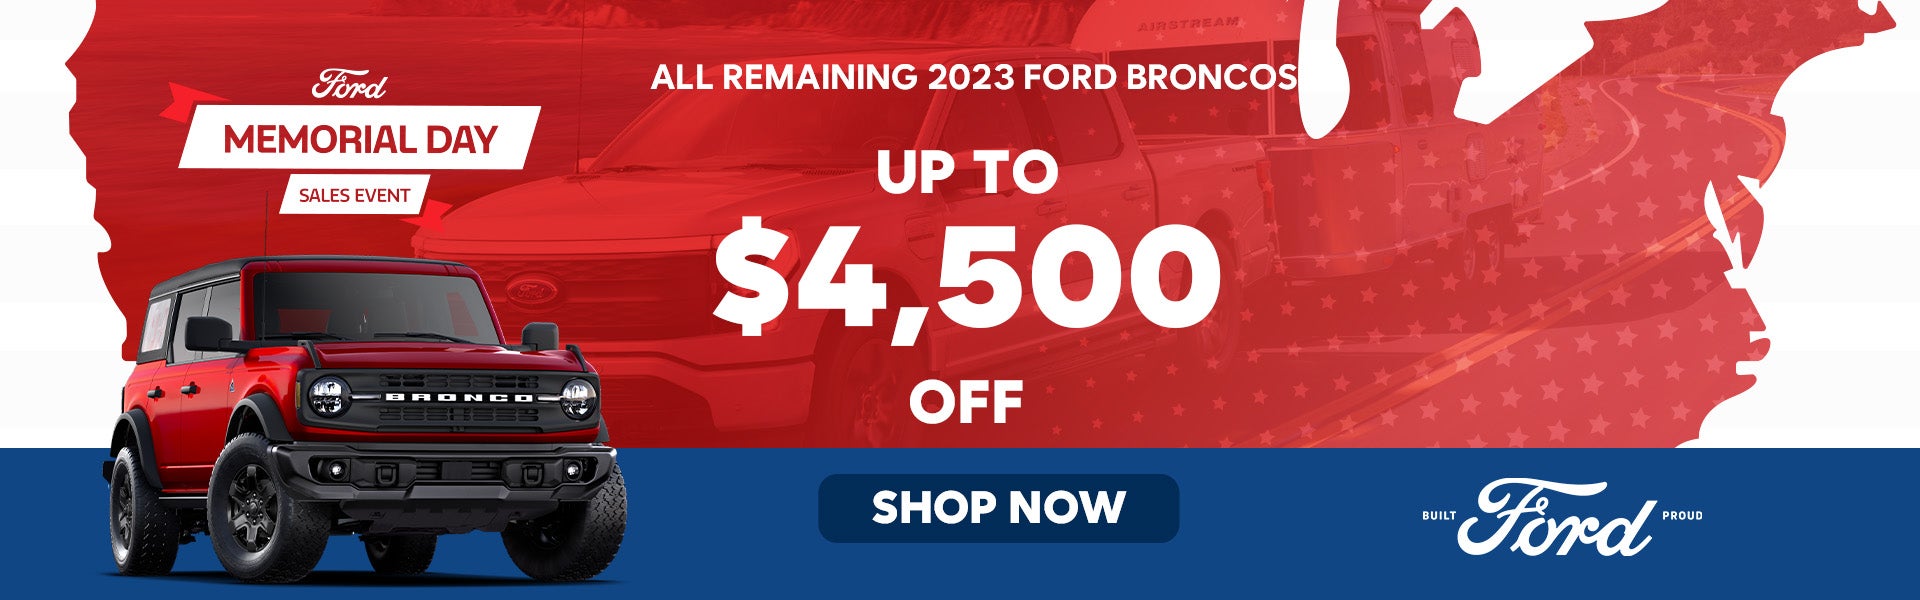 2023 Ford Broncos